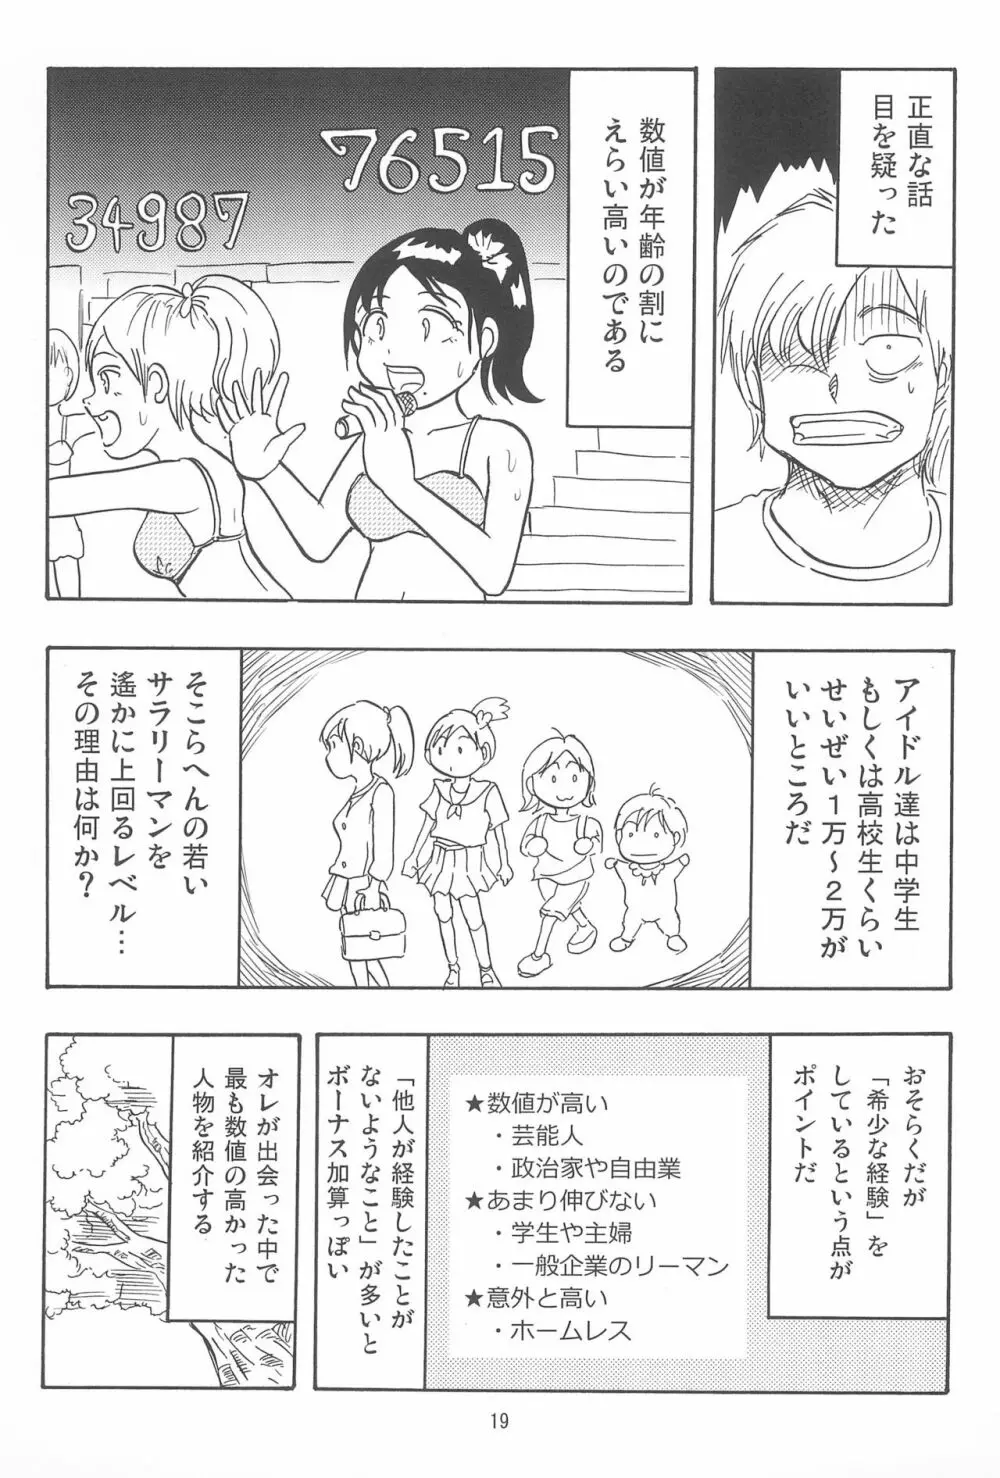 女子小学生日記10 - page19